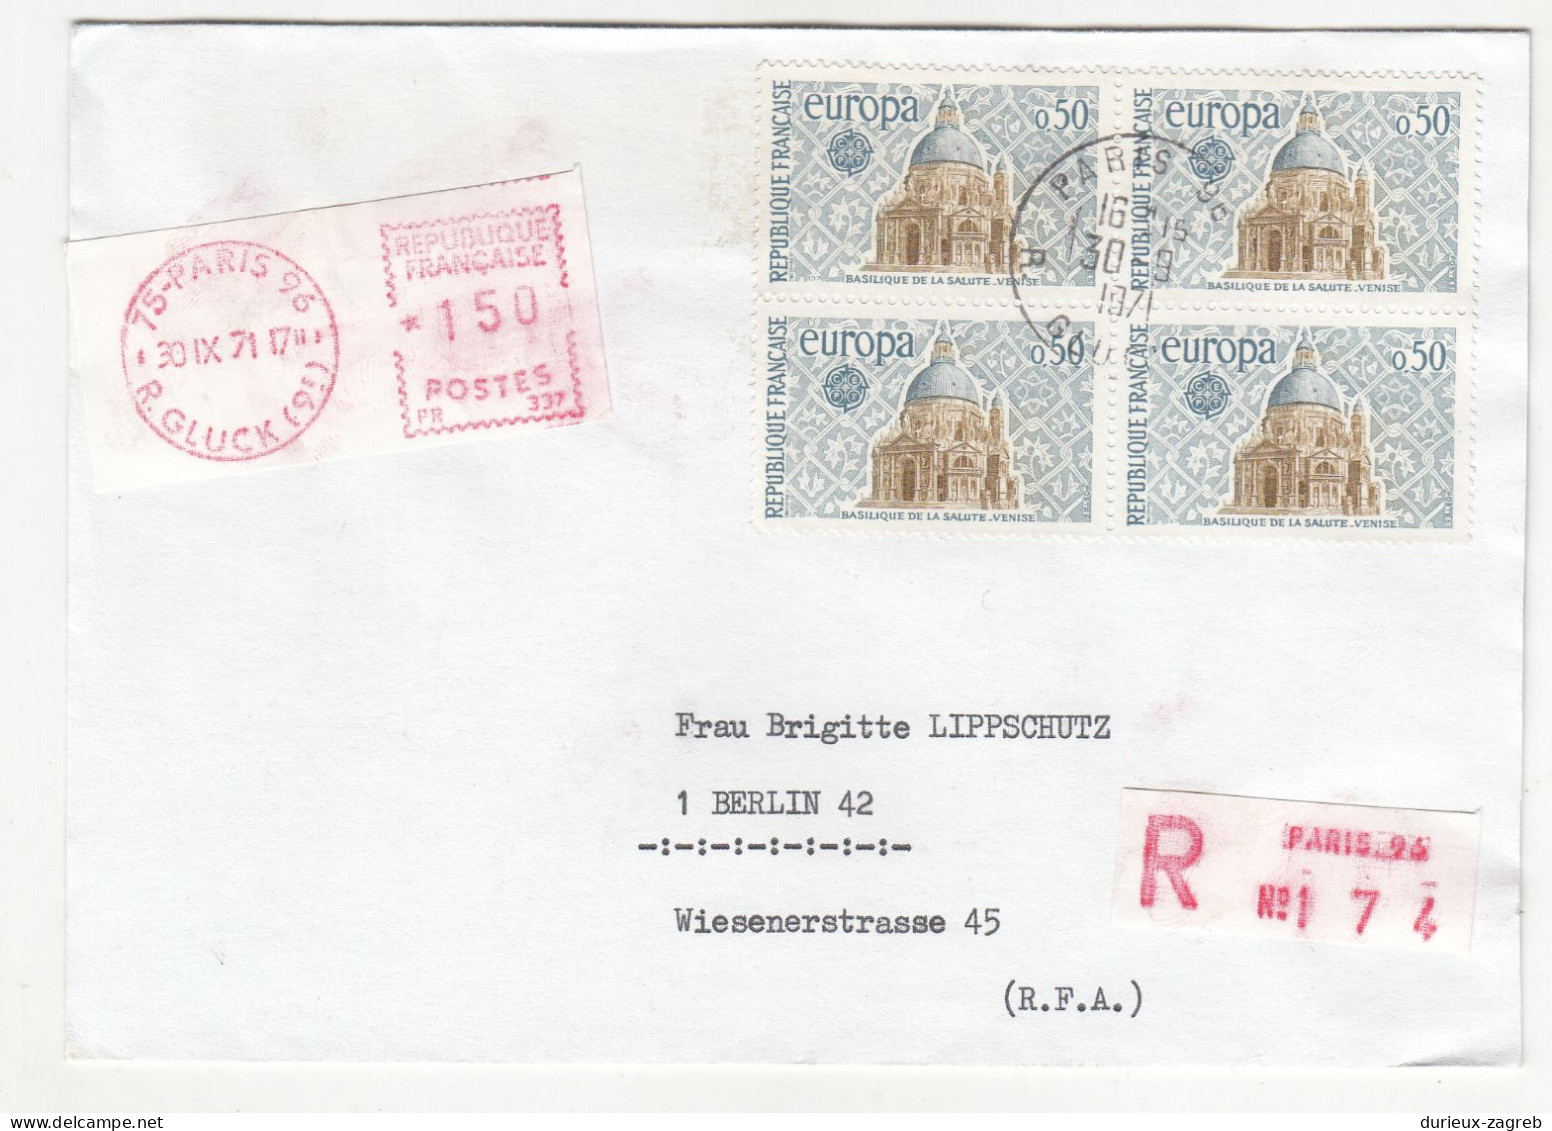 France Europa-CEPT Stamp Basilique De La Salute 1971 Block Of Four On Letter Cover Posted Registered B240510 - 1971